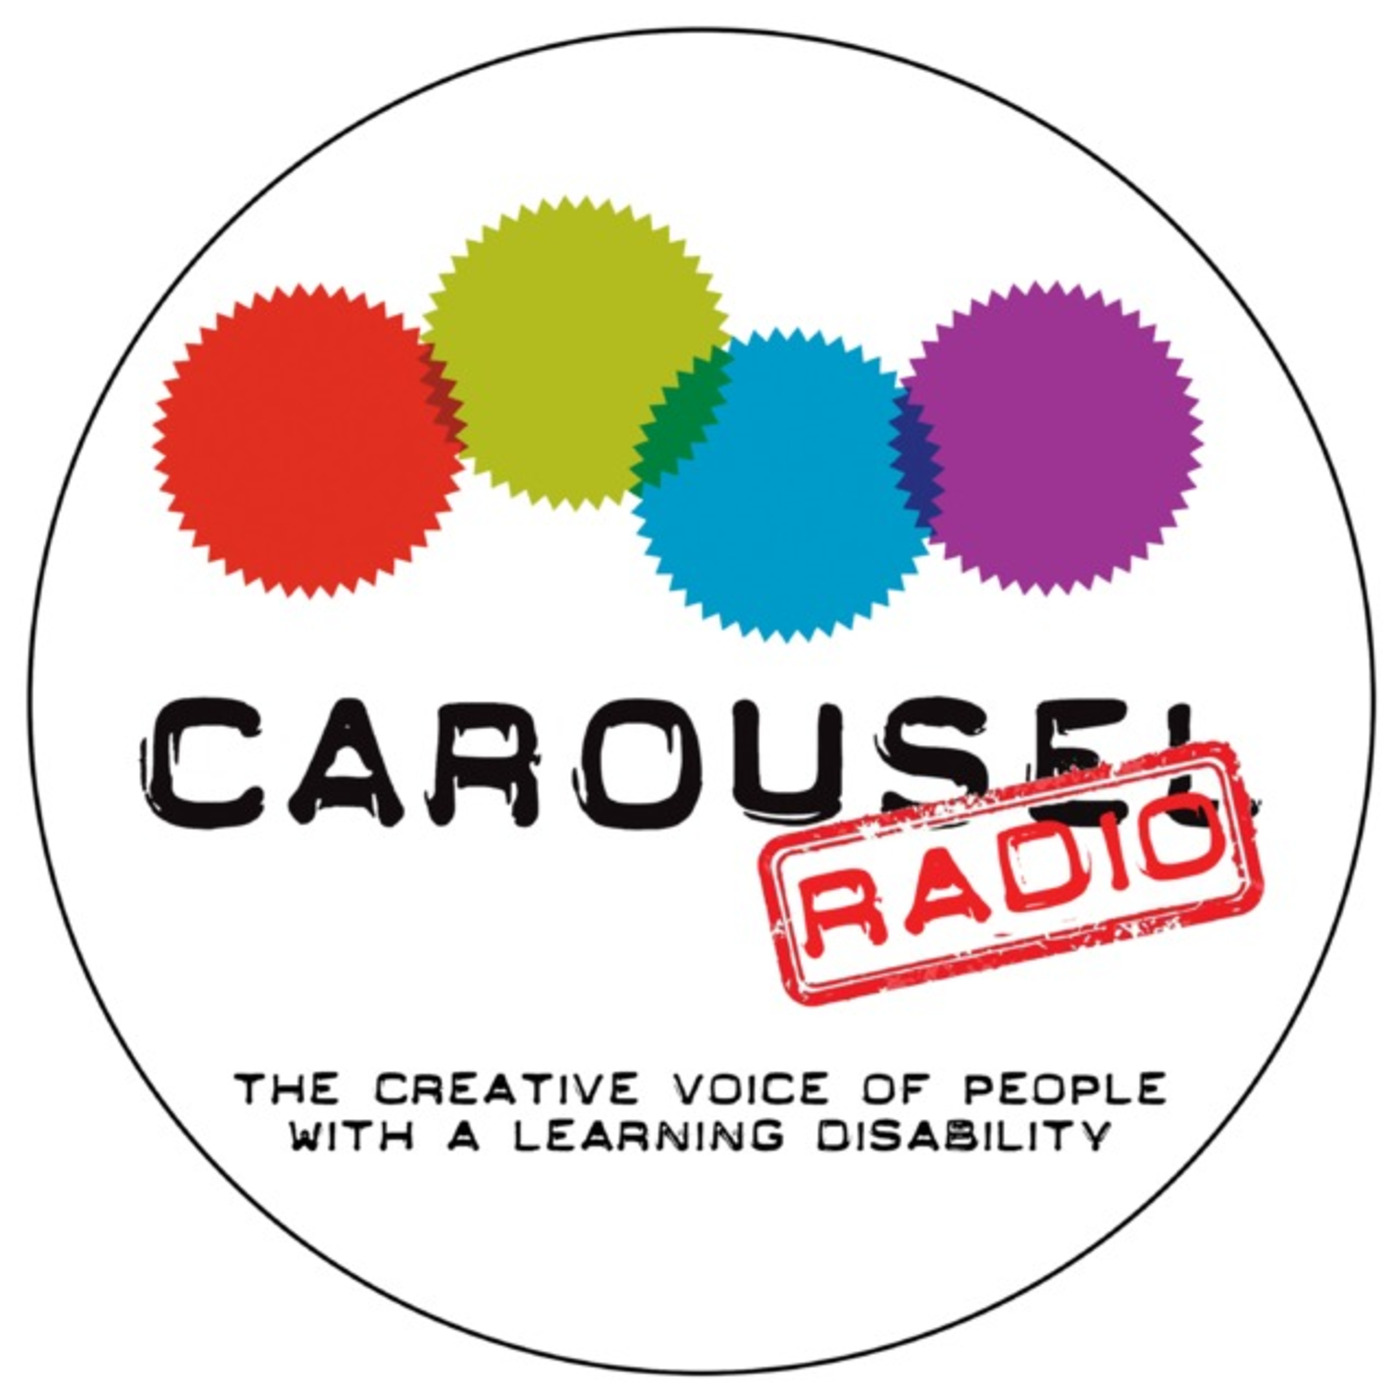 Carousel Radio May 2020